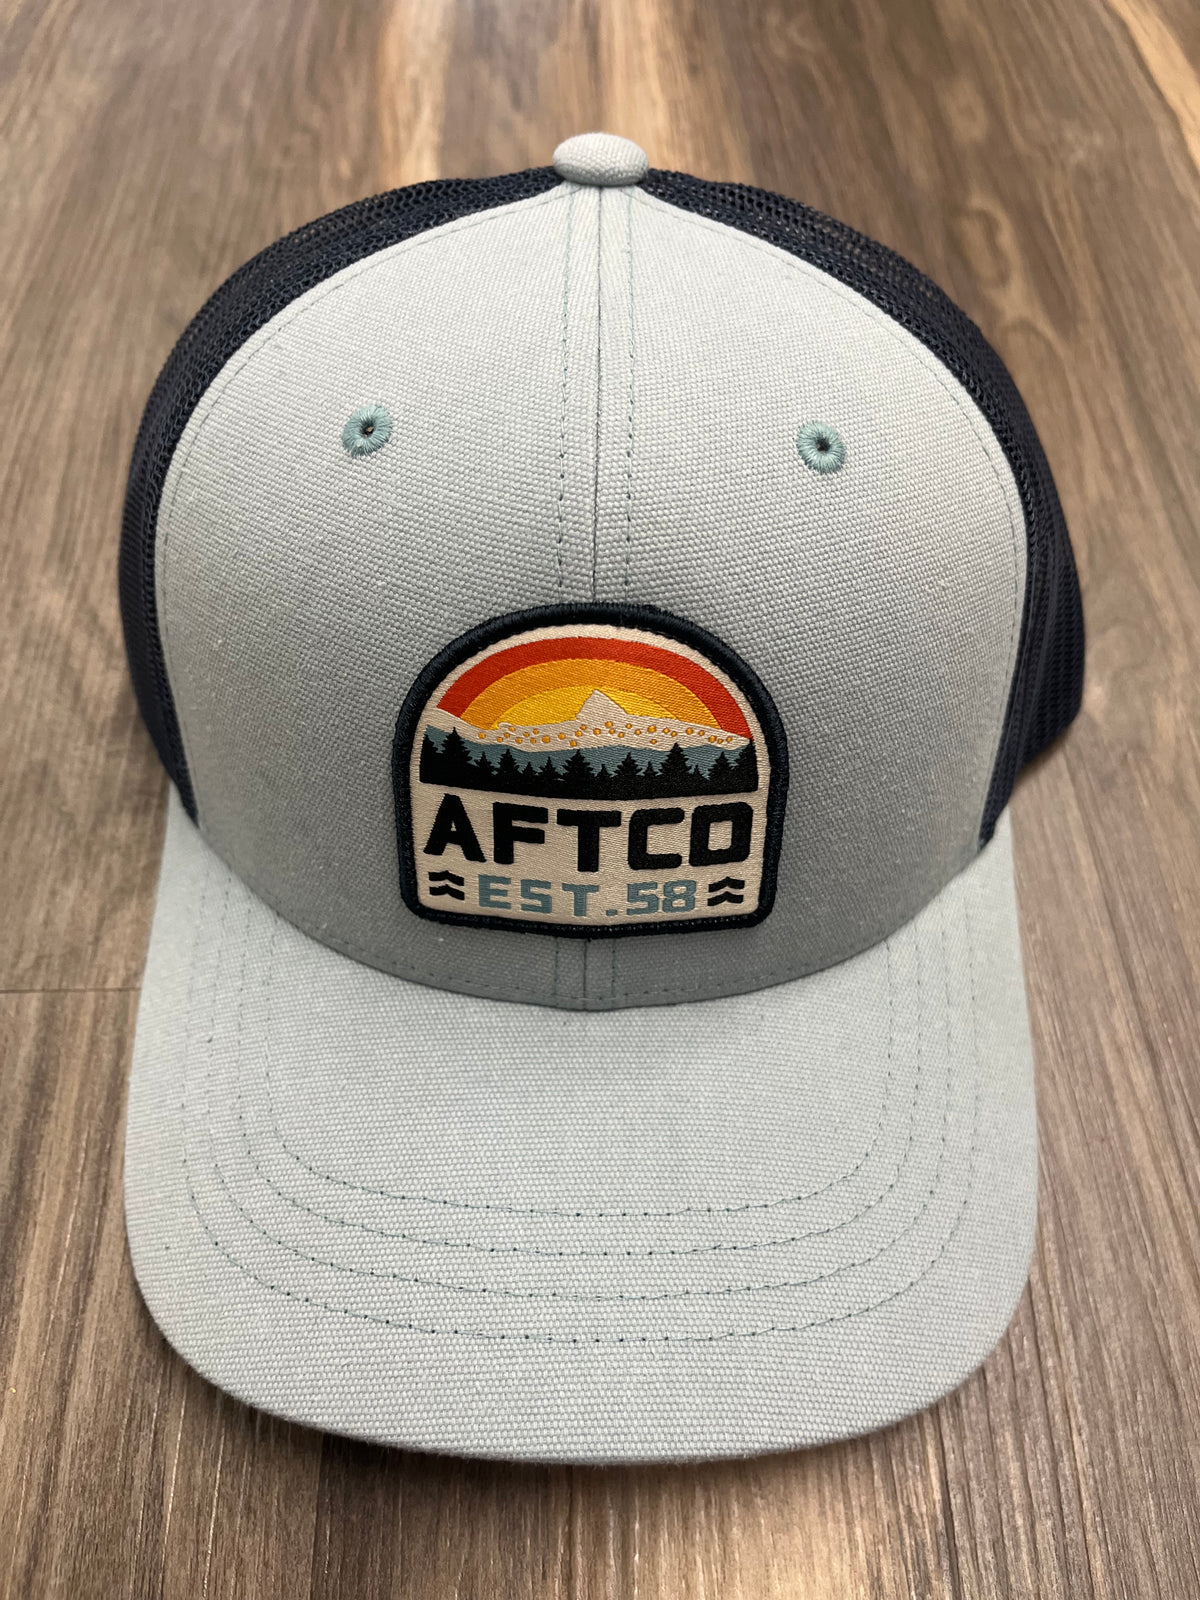 Aftco Rustic Trucker Hat - Pants Store